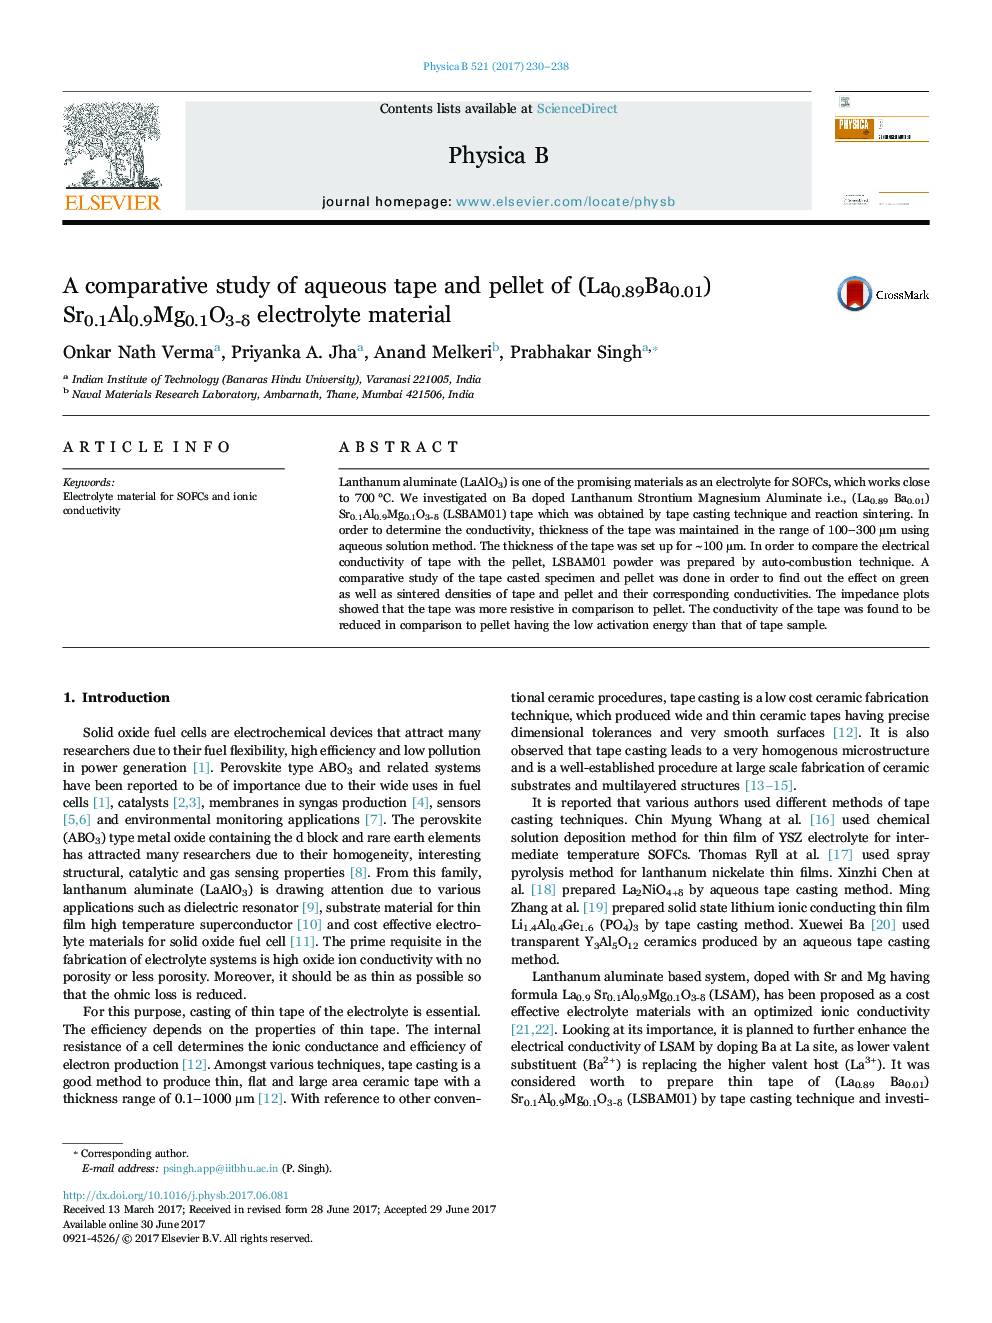 A comparative study of aqueous tape and pellet of (La0.89Ba0.01) Sr0.1Al0.9Mg0.1O3-Î´ electrolyte material